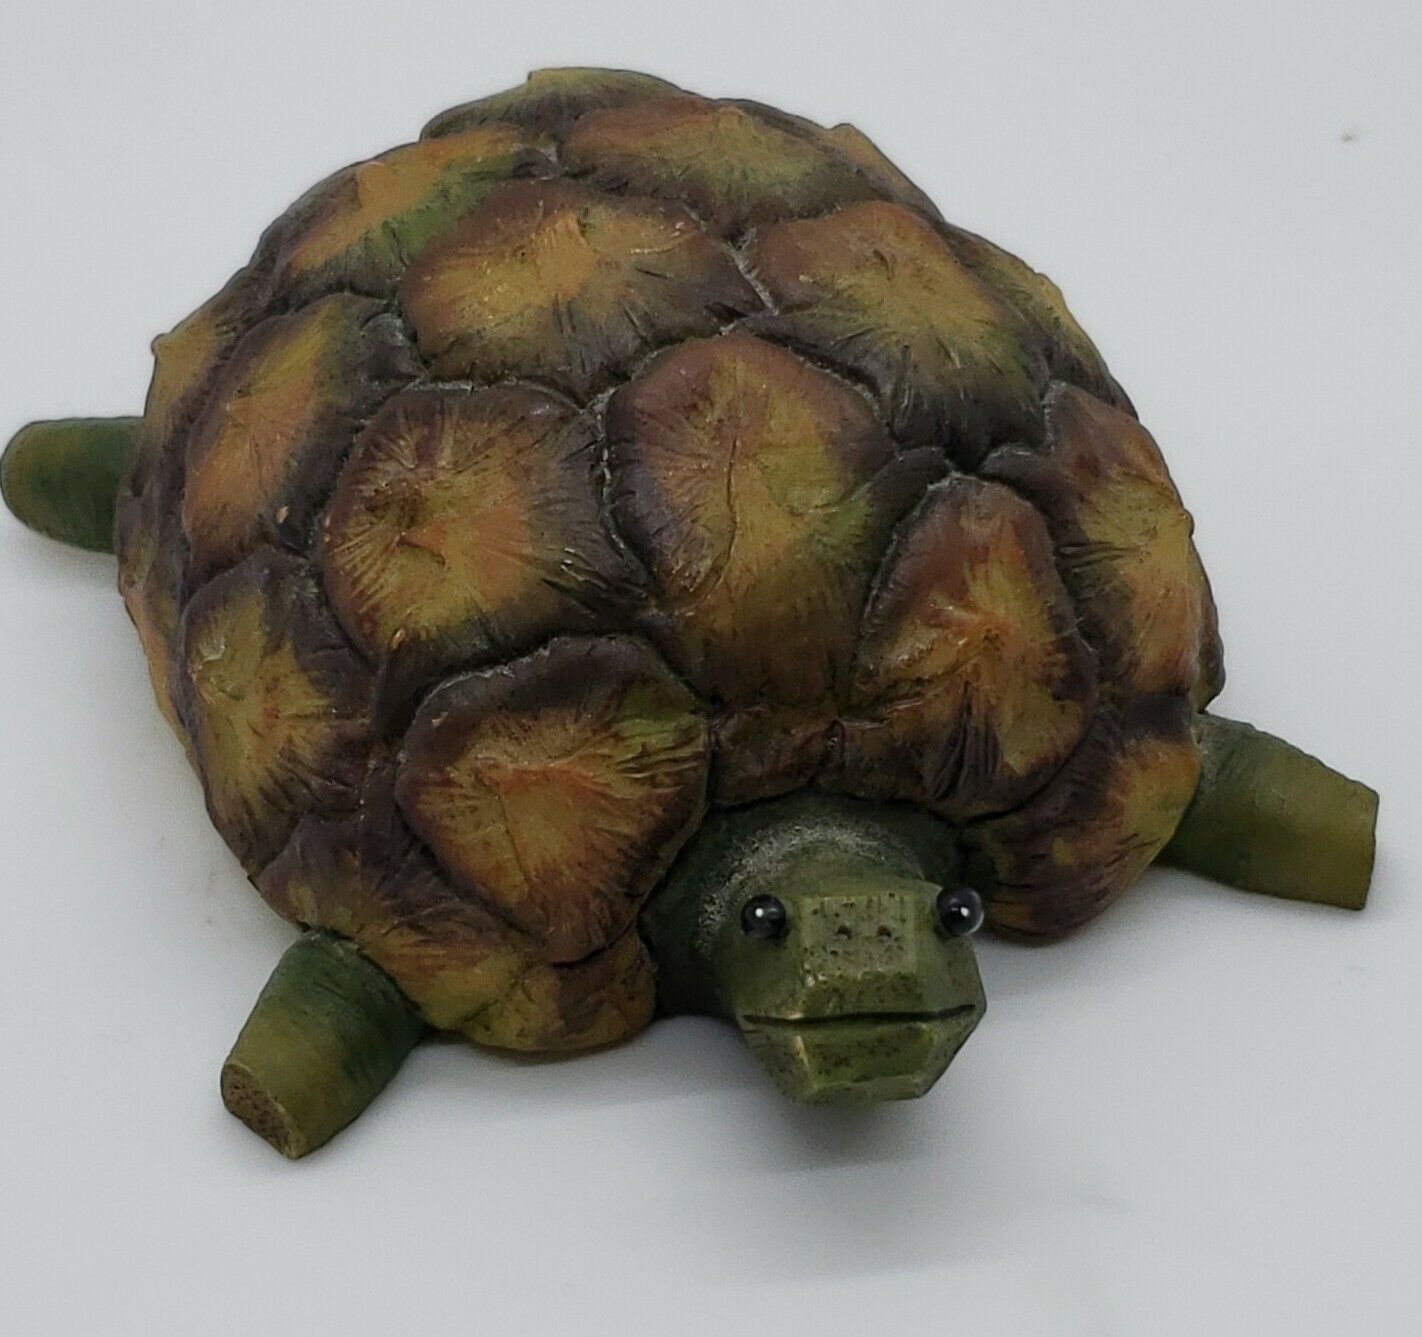 2005 Enesco Home Grown Anthropomorphic Pineapple Turtle Figurine Tortoise 